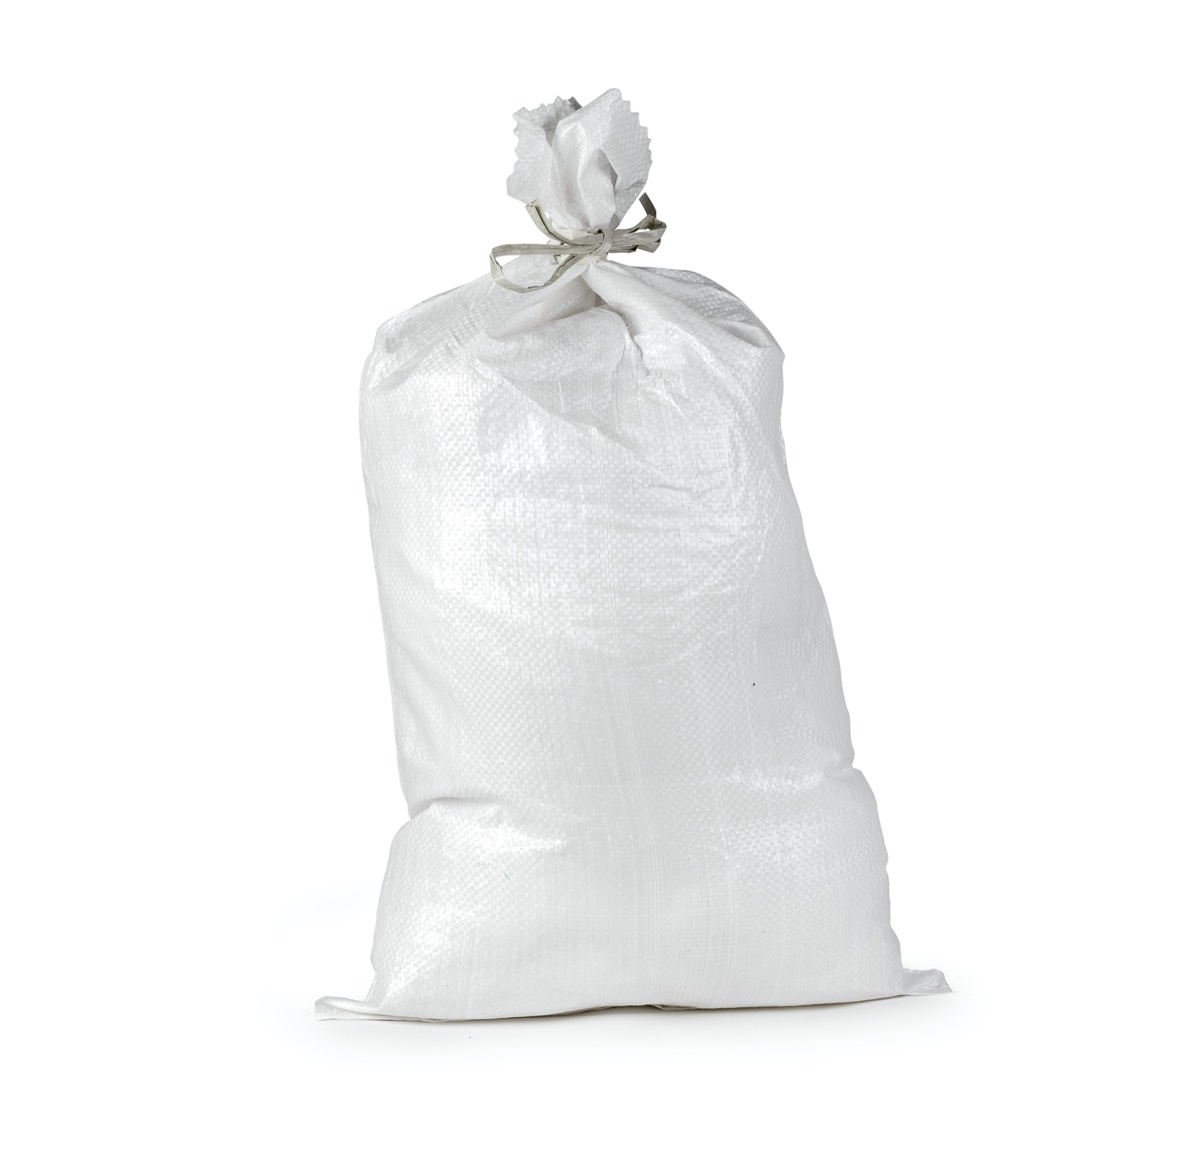 Sand Bags - Empty Sandbags For Sale (Woven Polypropylene) in Bulk –  Sandbaggy